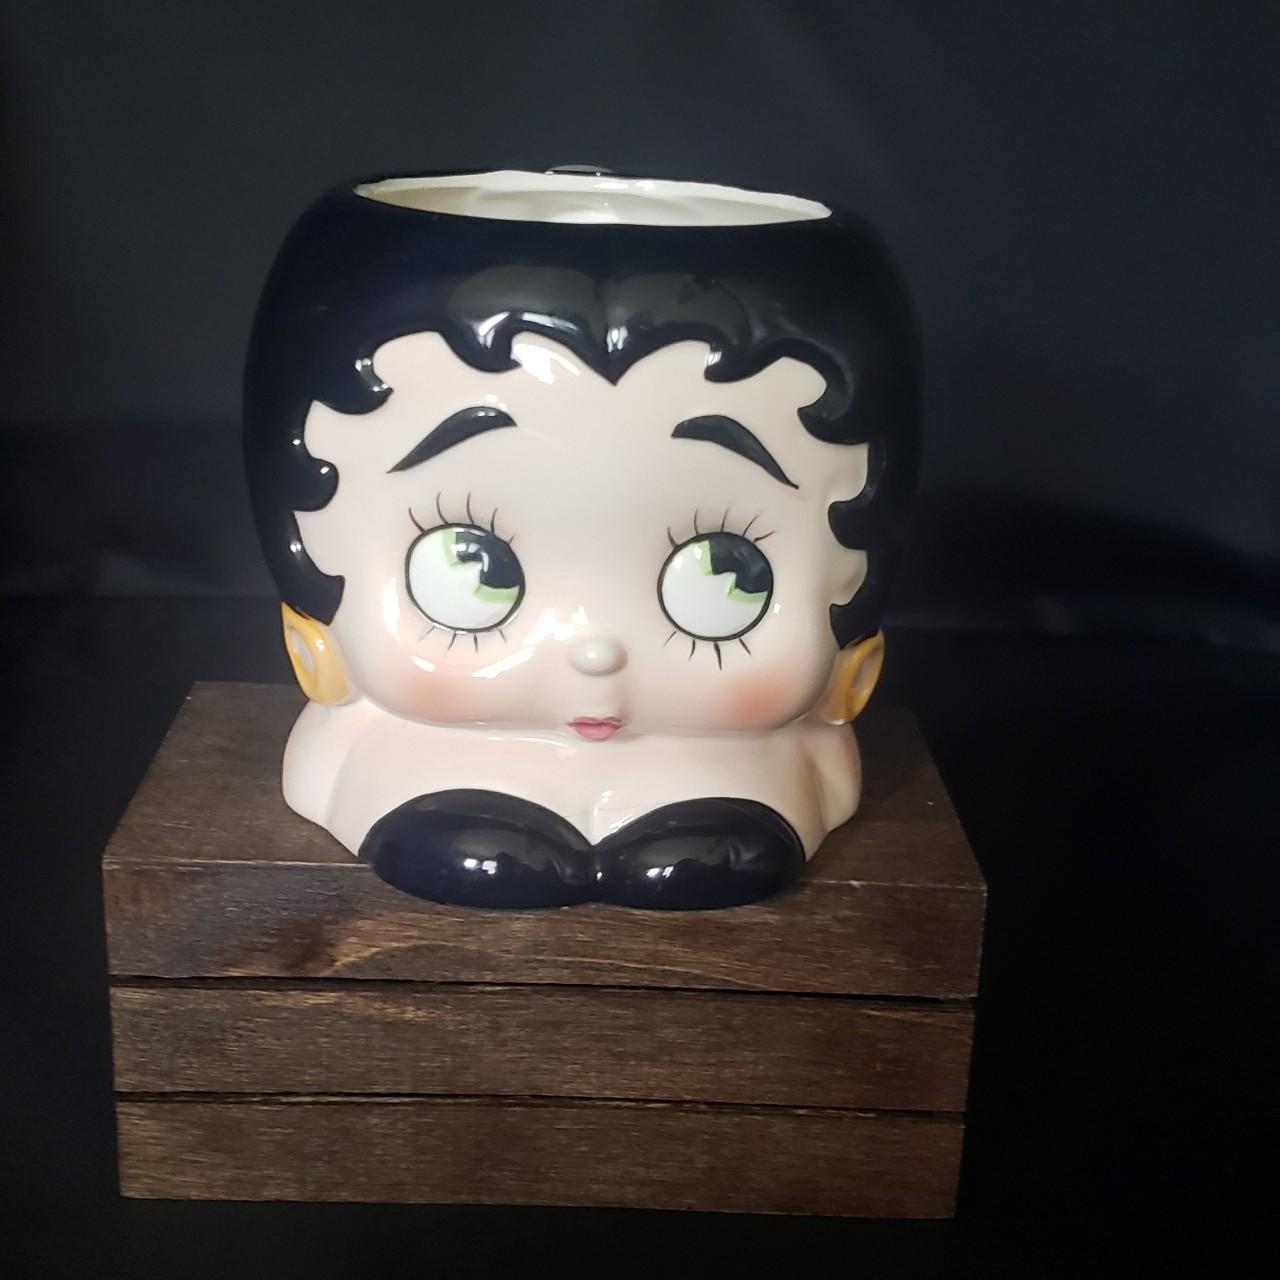 Vintage Betty Boop Mug, 1990's Betty Boop Mug